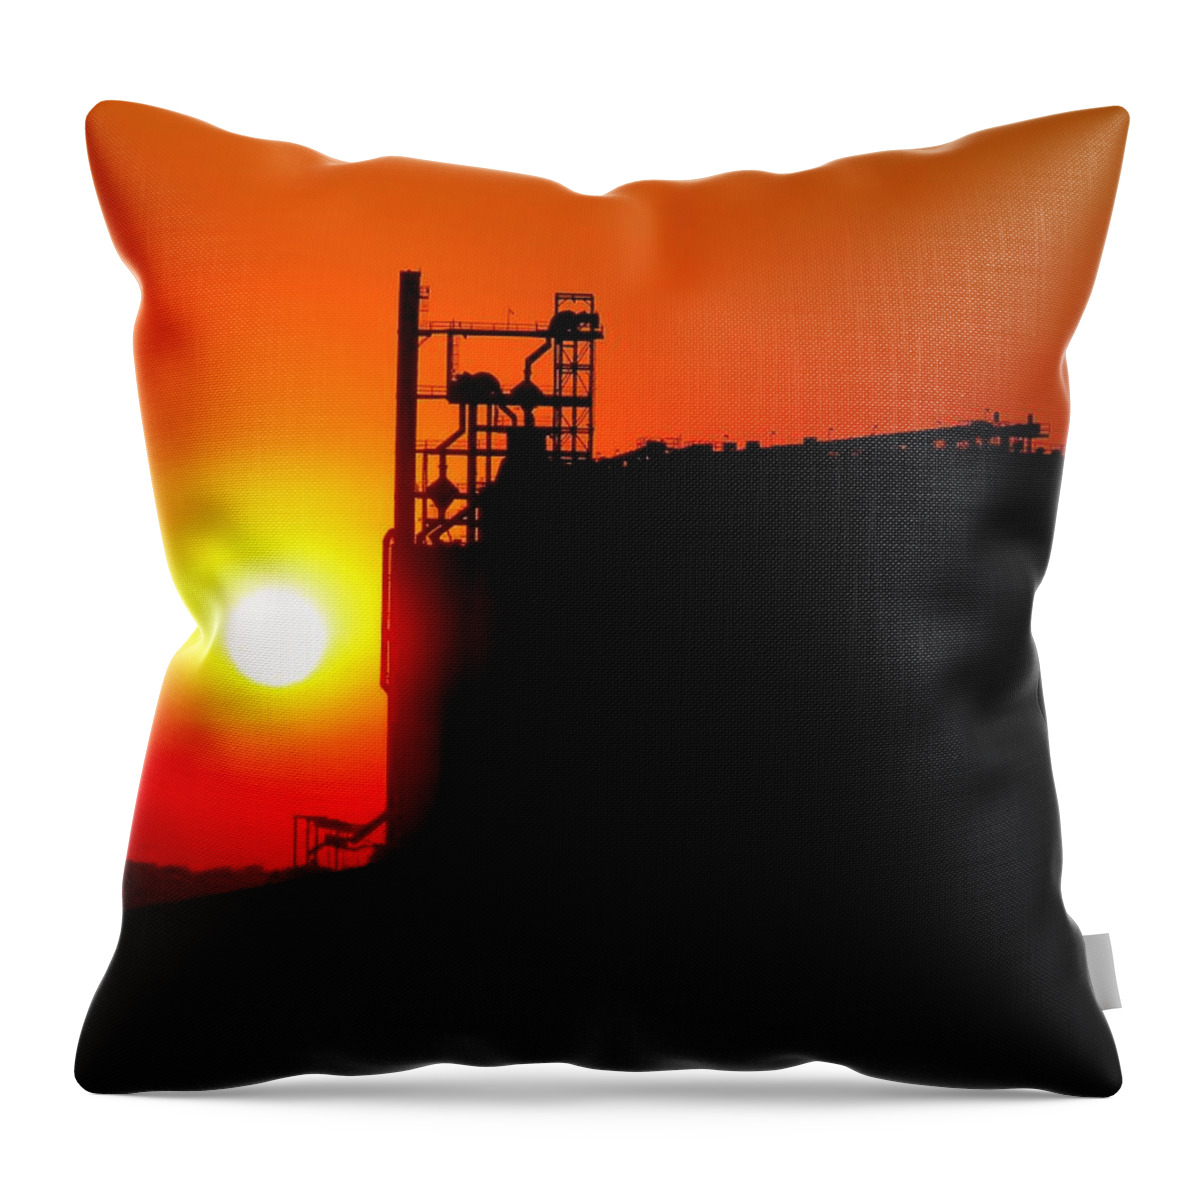 Kansas Throw Pillow featuring the photograph Kansas Grain Elevator Sunset by Keith Stokes